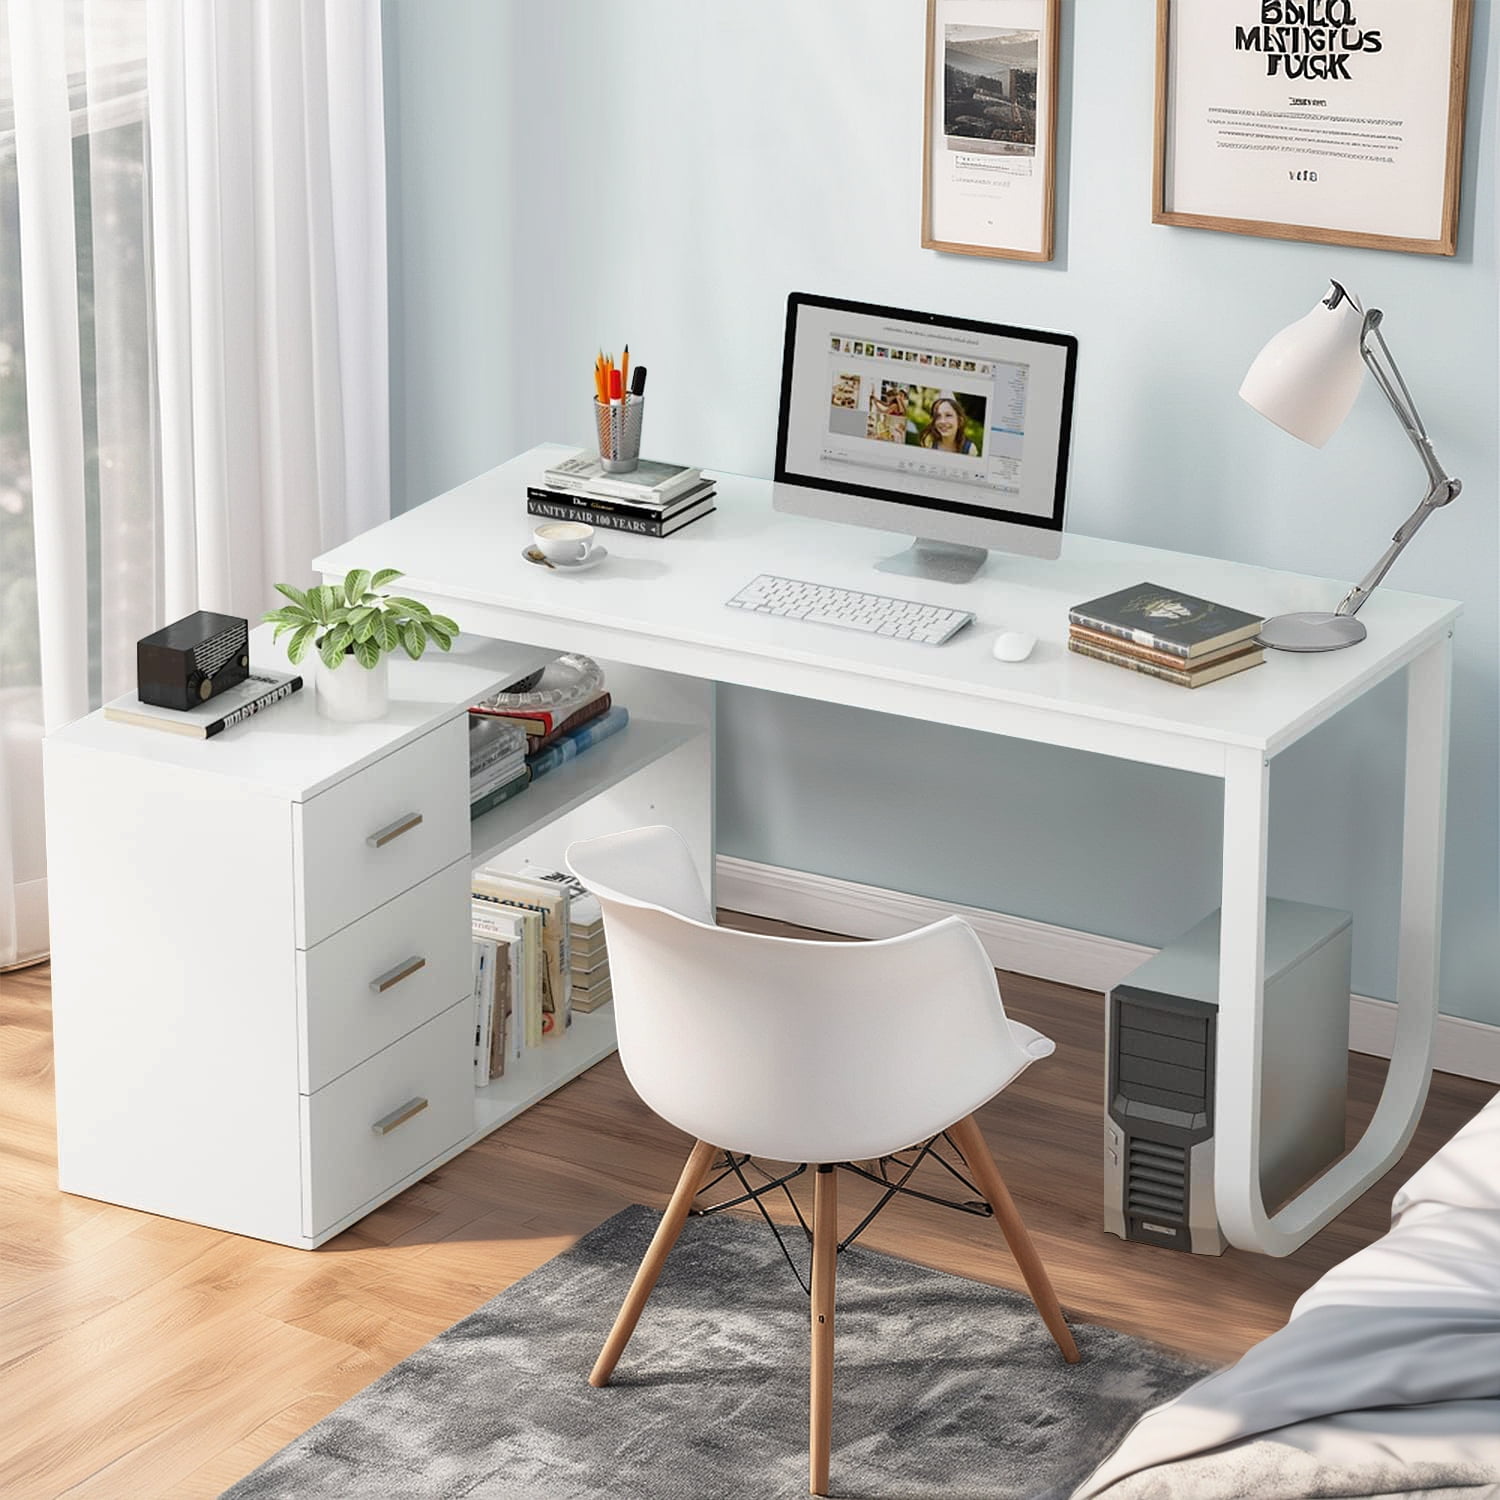 Mueble para impresora  Computer desk design, Office design, Desk